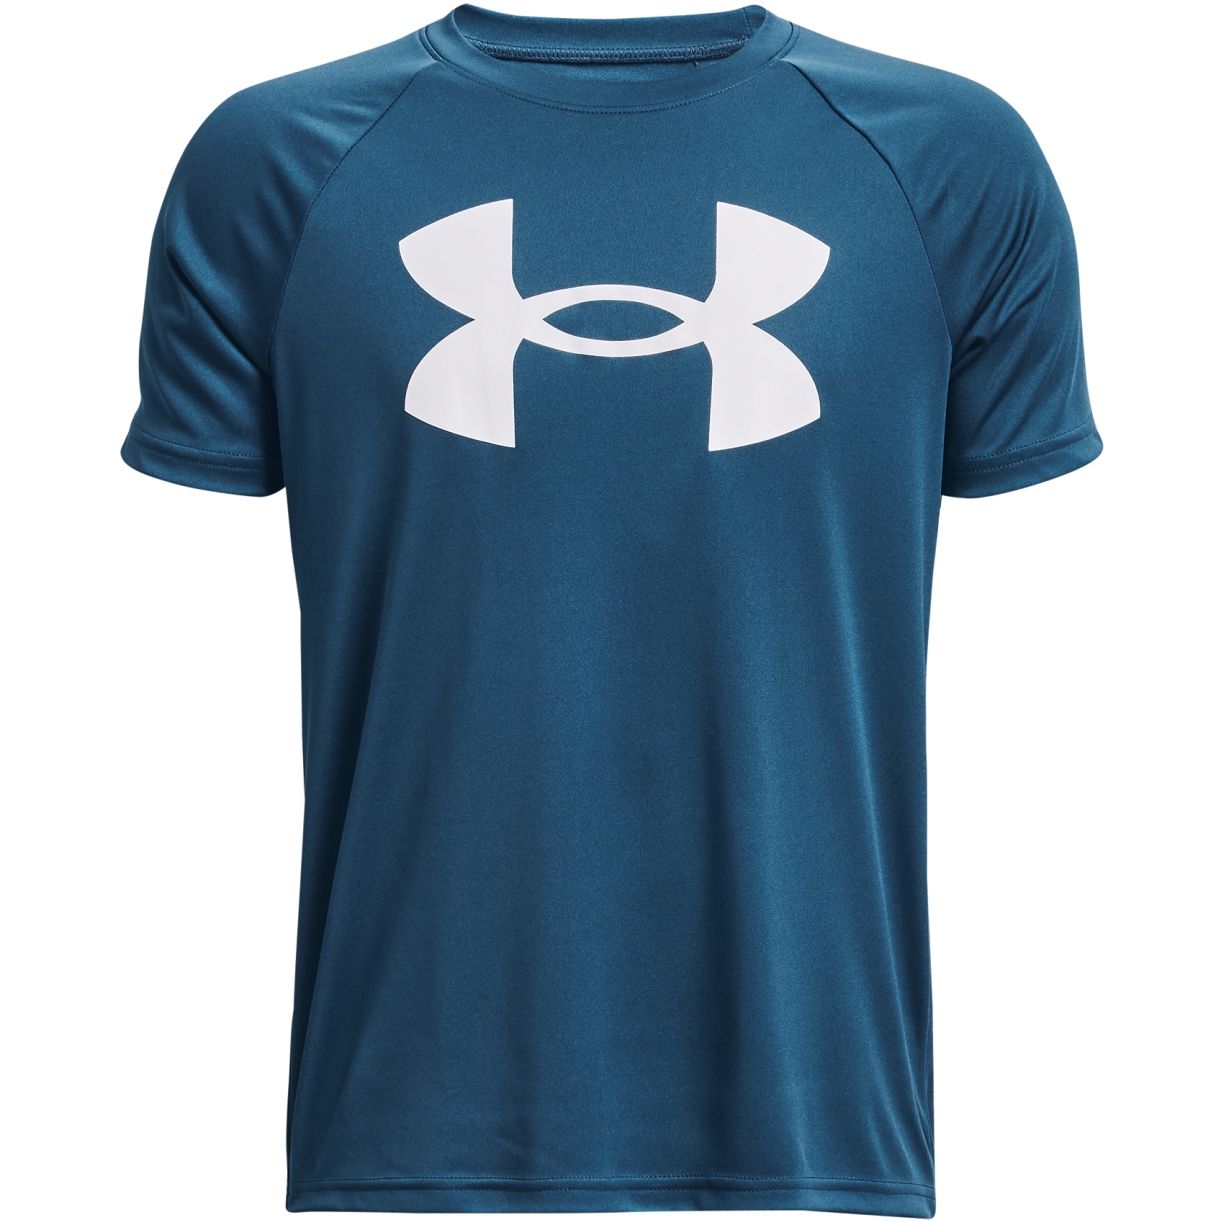 Picture of Under Armour UA Tech™ Big Logo Short Sleeve Shirt Boys - Petrol Blue/White